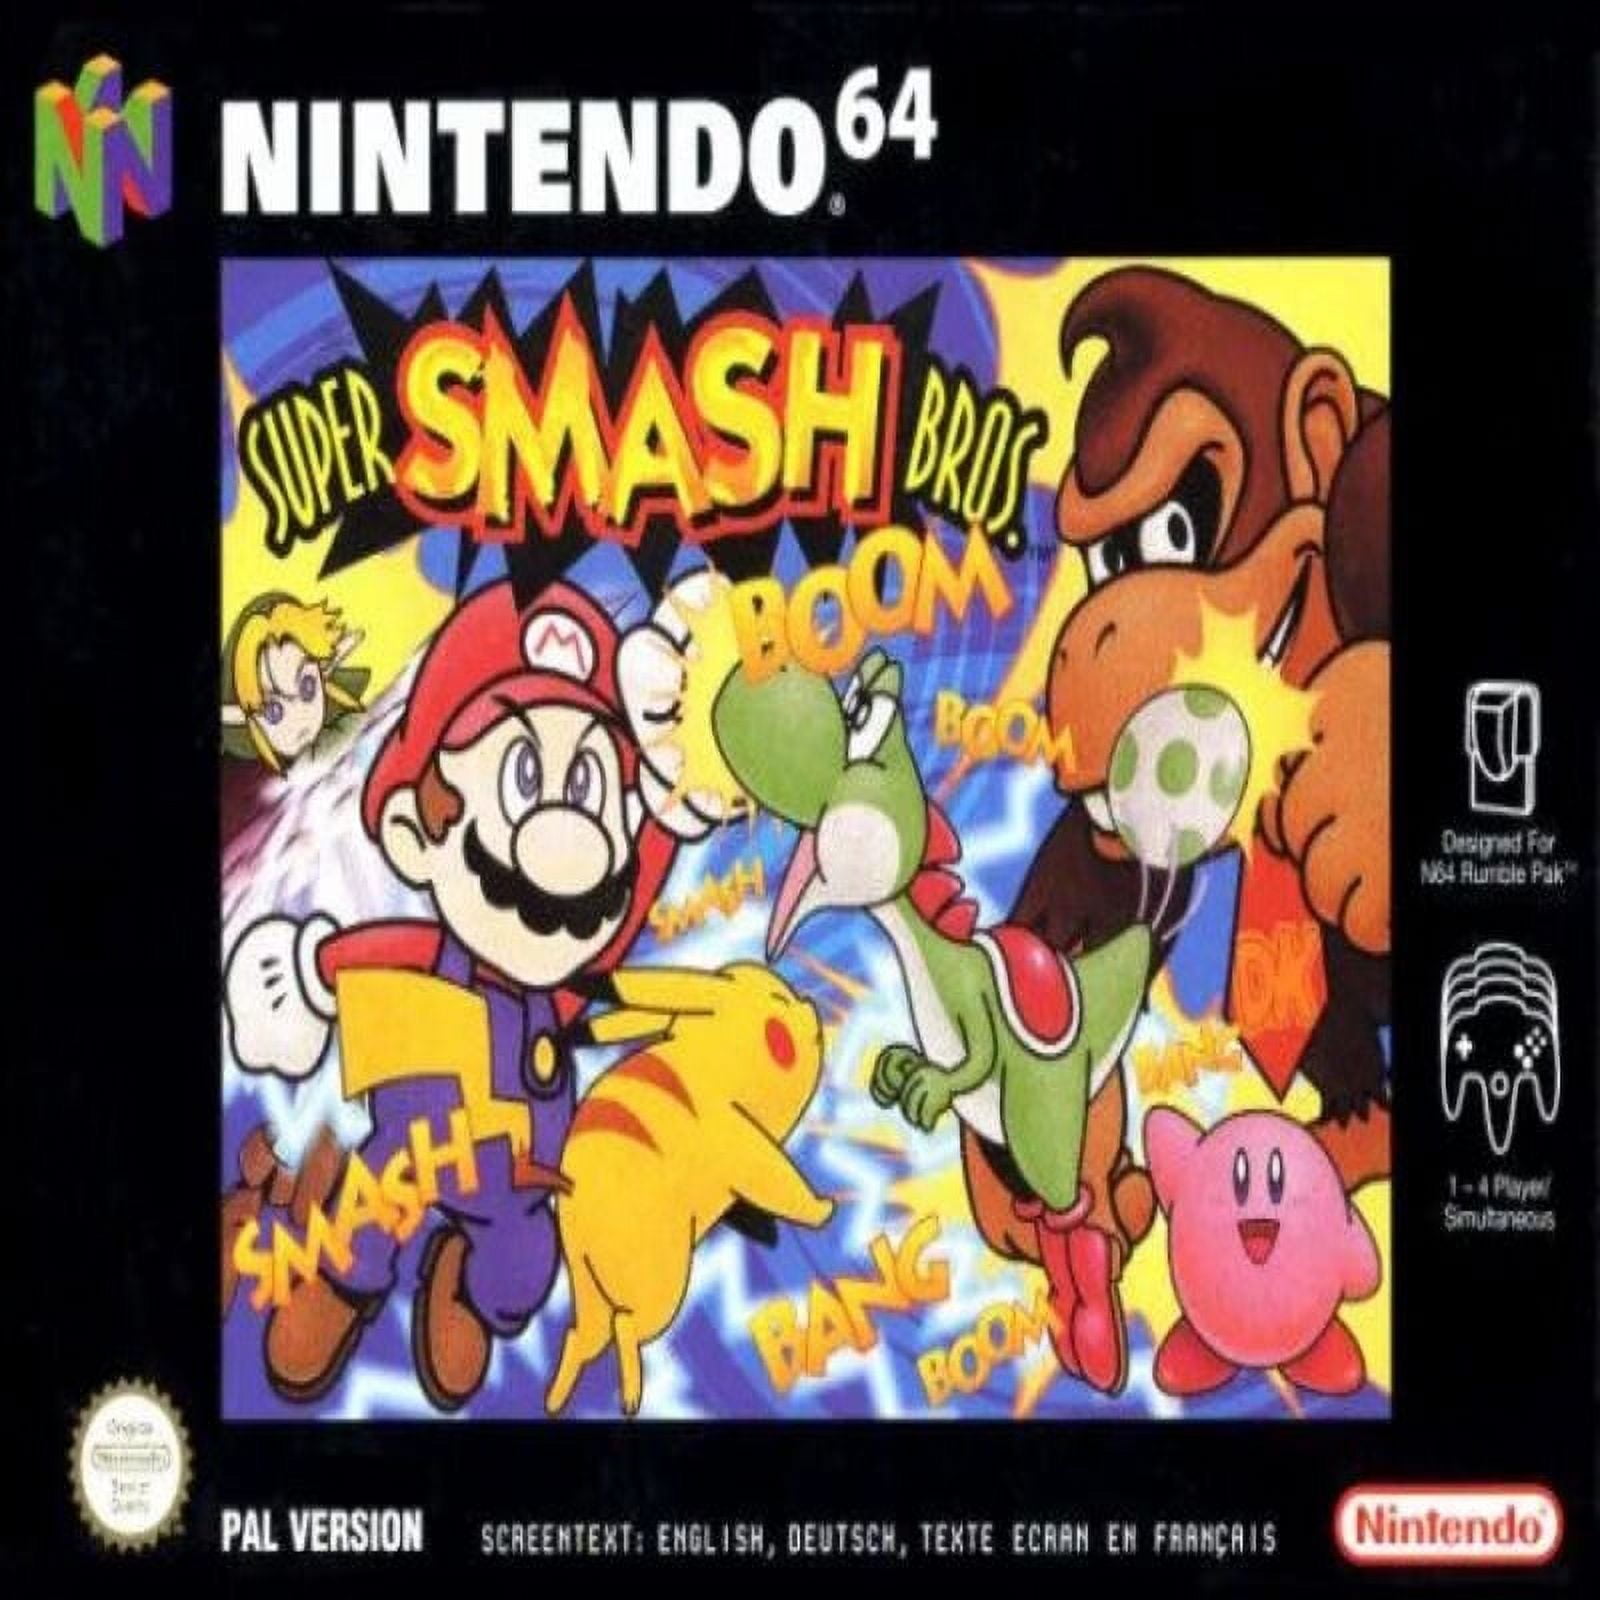 Play Nintendo 64 Super Smash Bros. 19XXTE Online in your browser 